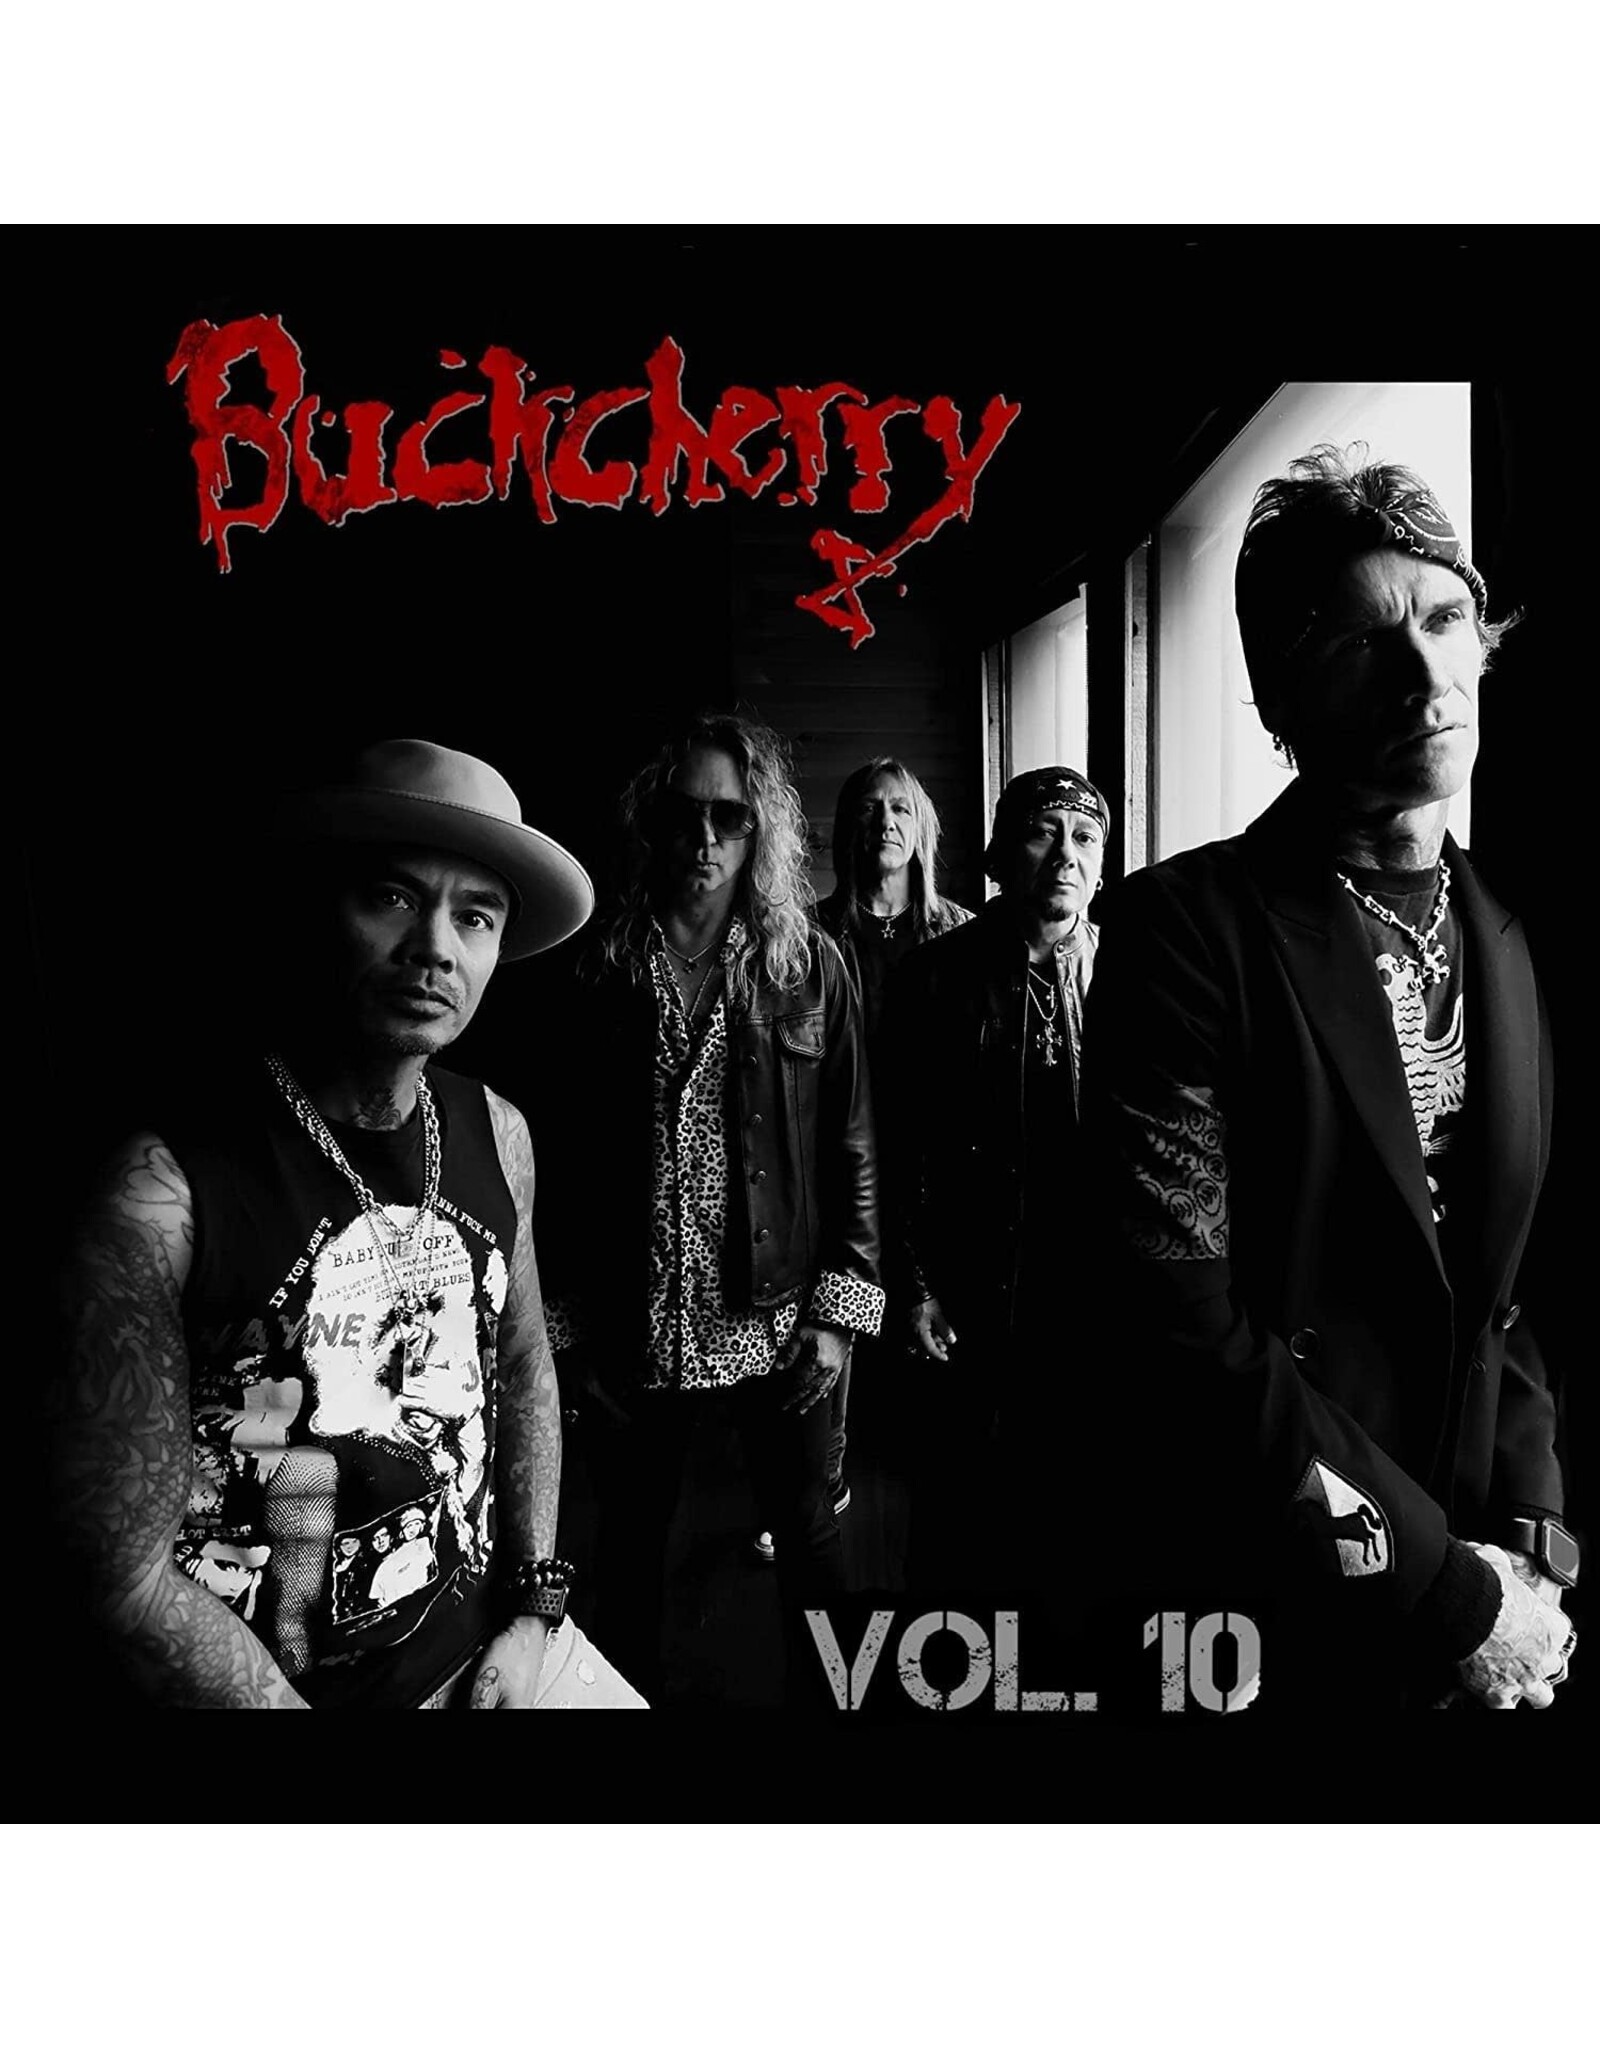 Buckcherry - Vol 10 LP